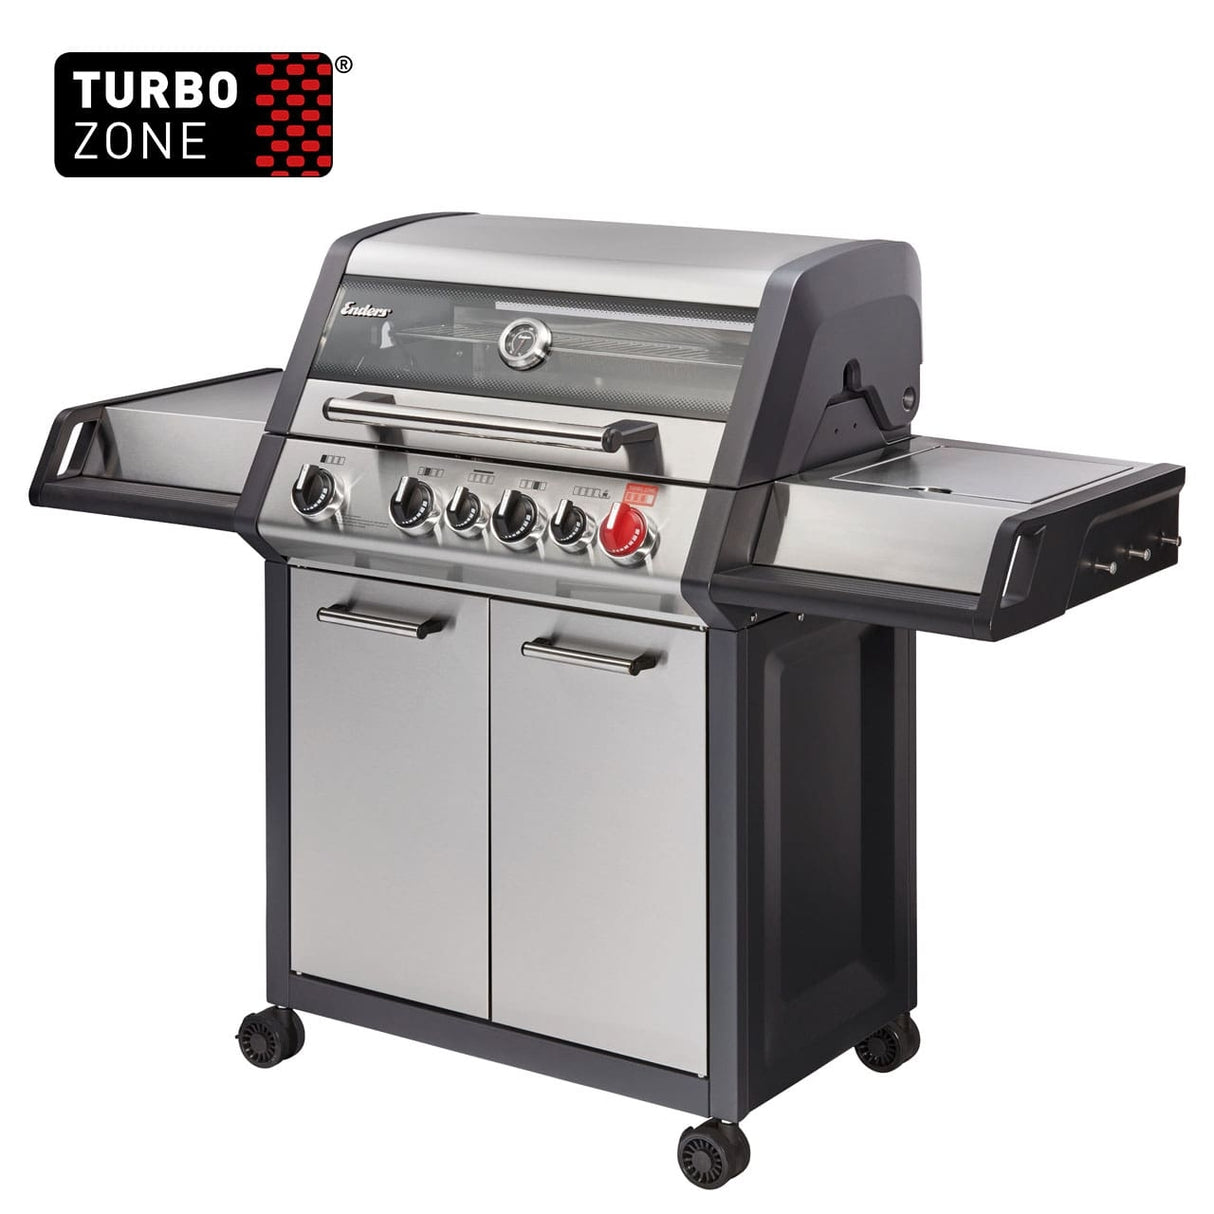 Enders Monroe Pro 4 SIK Turbo Barbecue